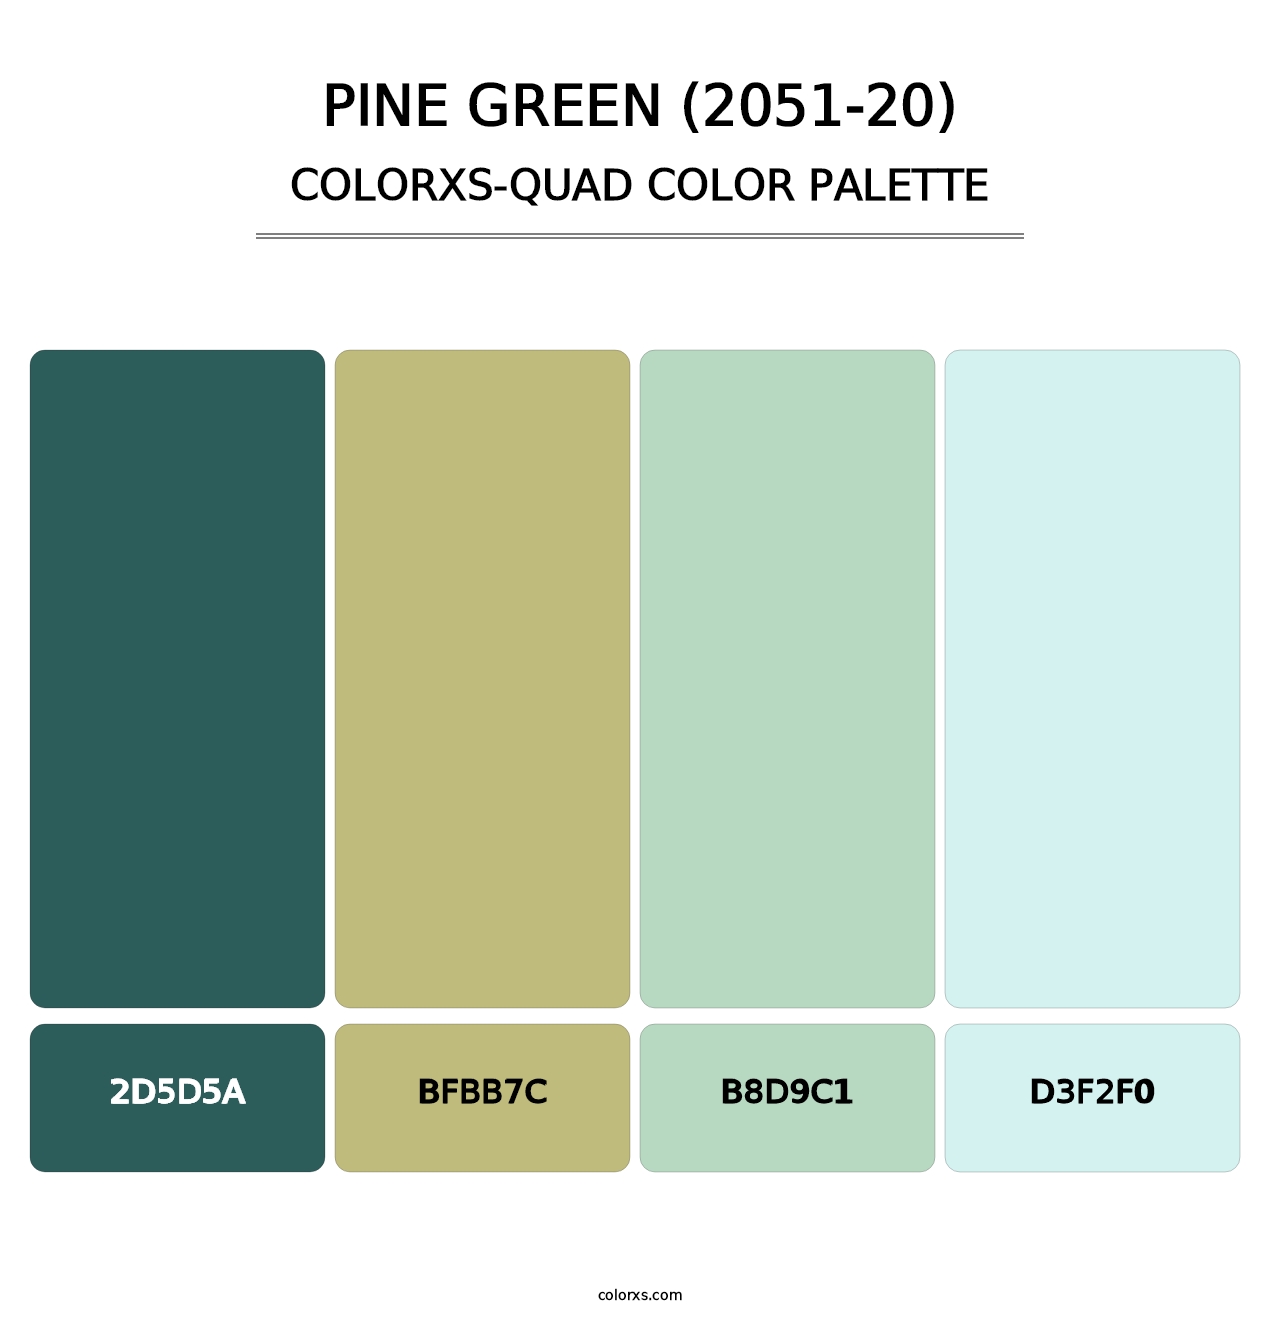 Pine Green (2051-20) - Colorxs Quad Palette